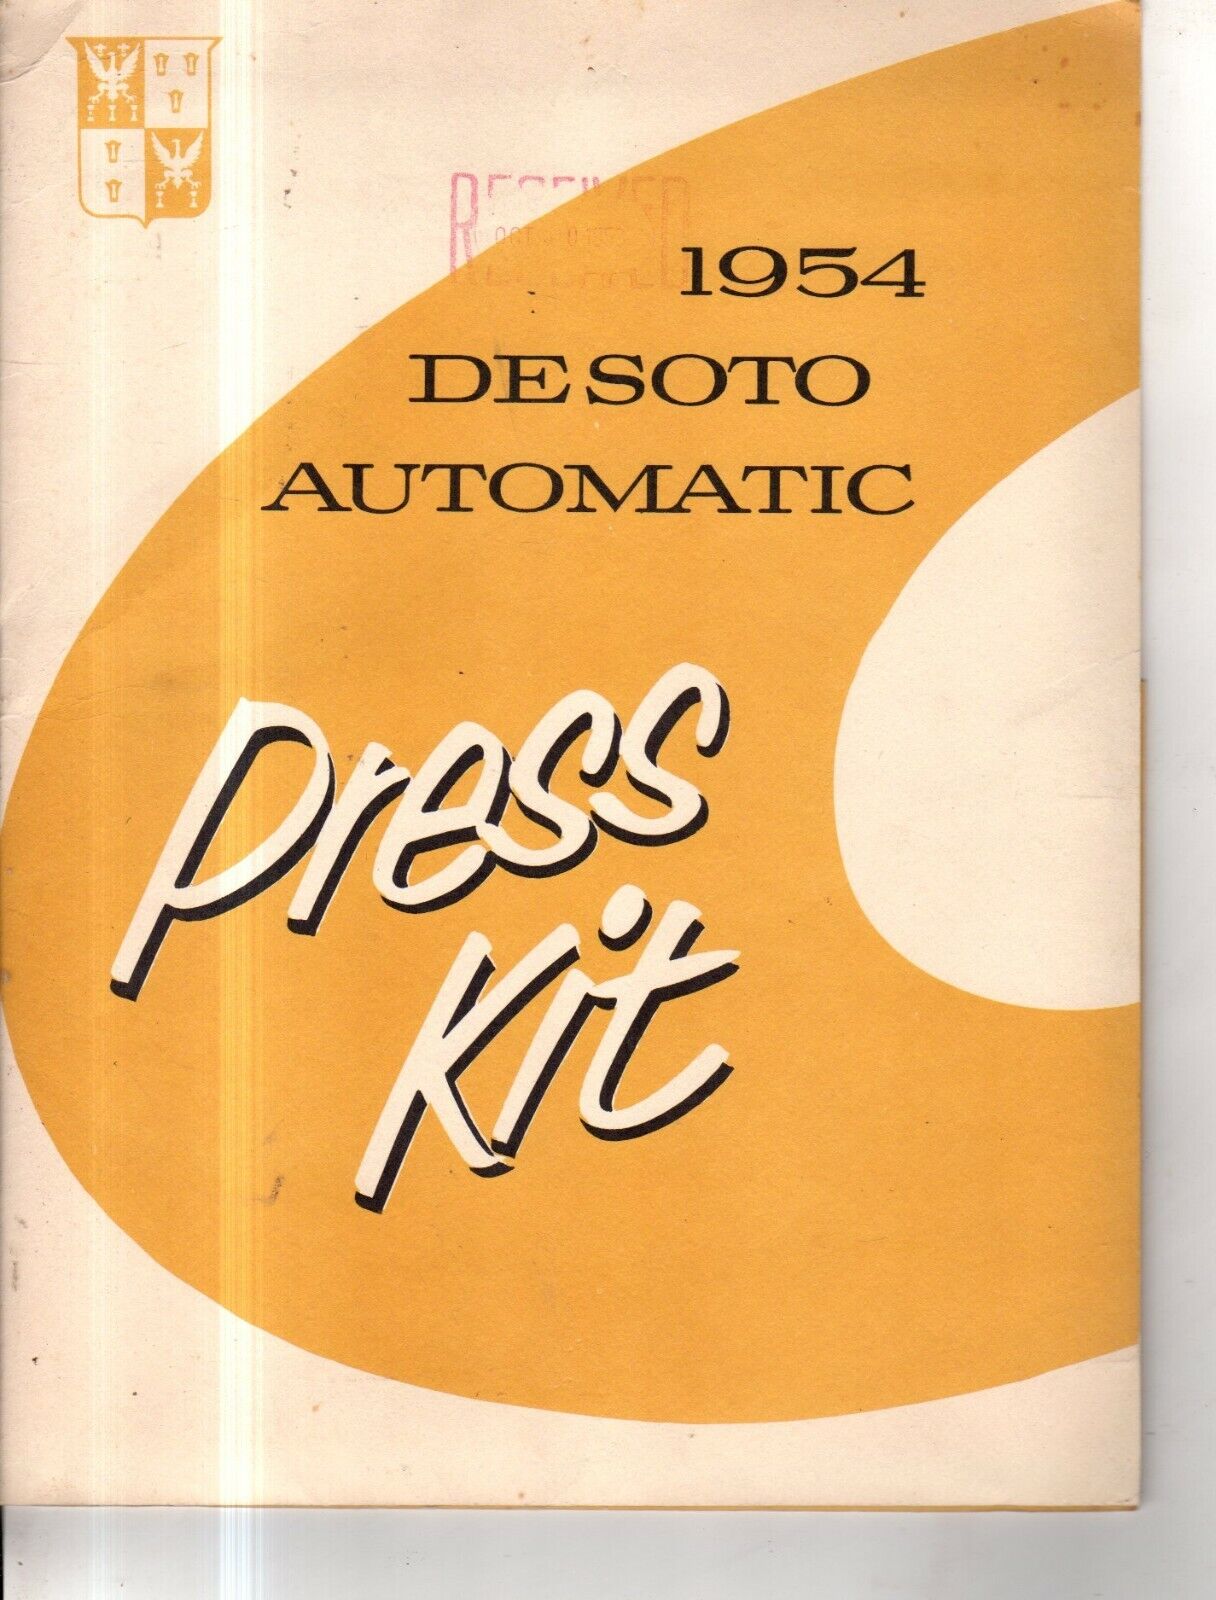 1954 DeSoto Original Press Kit with seven glossy photos - Extremely Rare